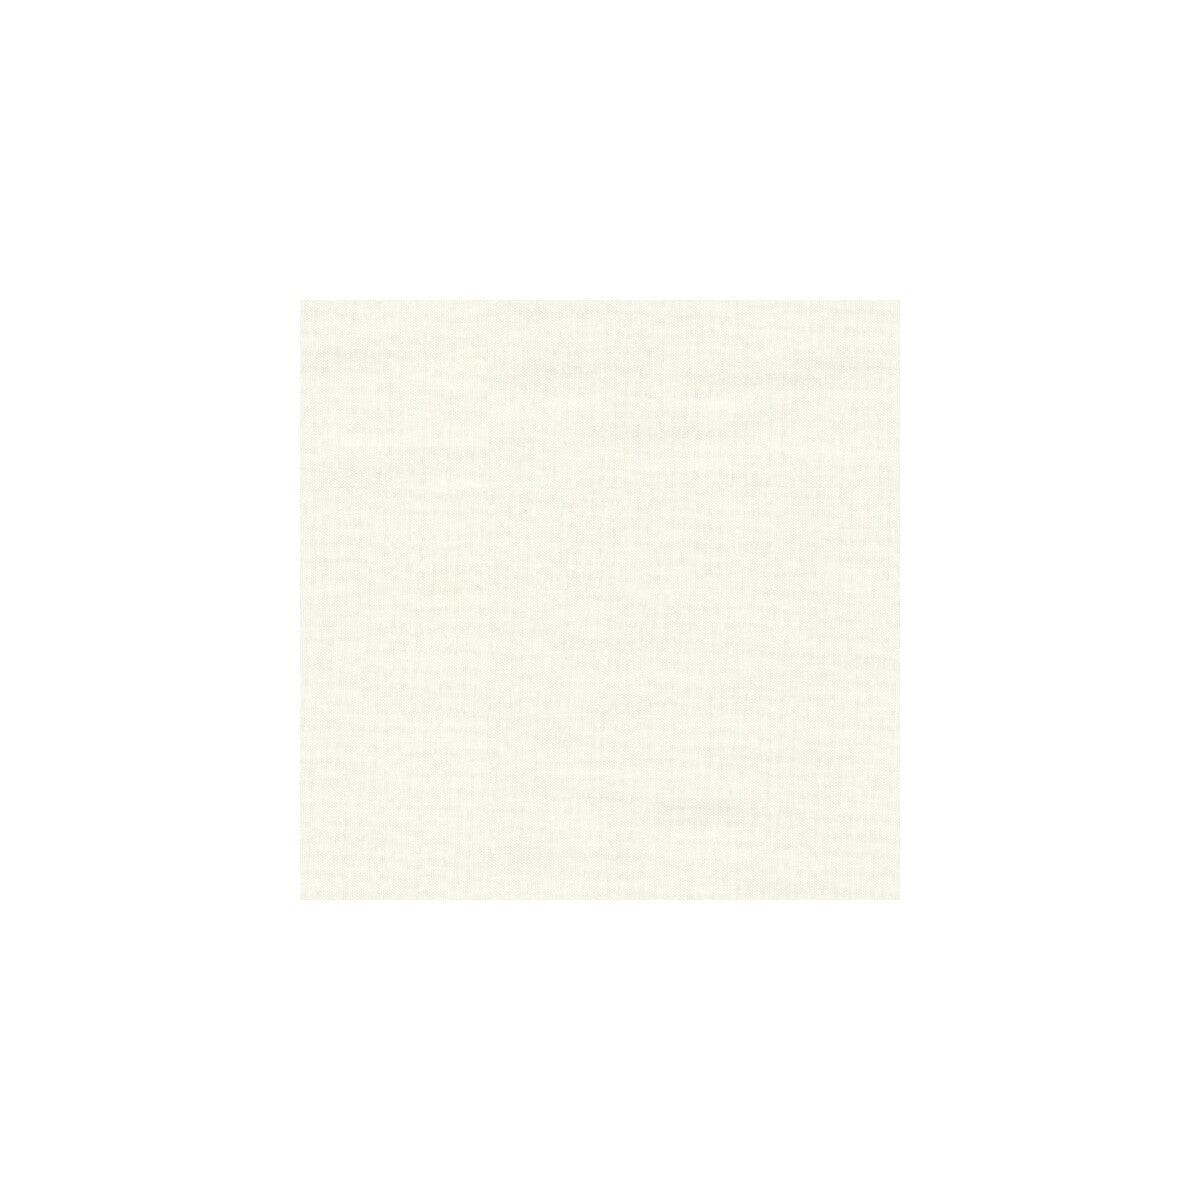 Kravet Basics fabric in 3693-101 color - pattern 3693.101.0 - by Kravet Basics in the Gis collection